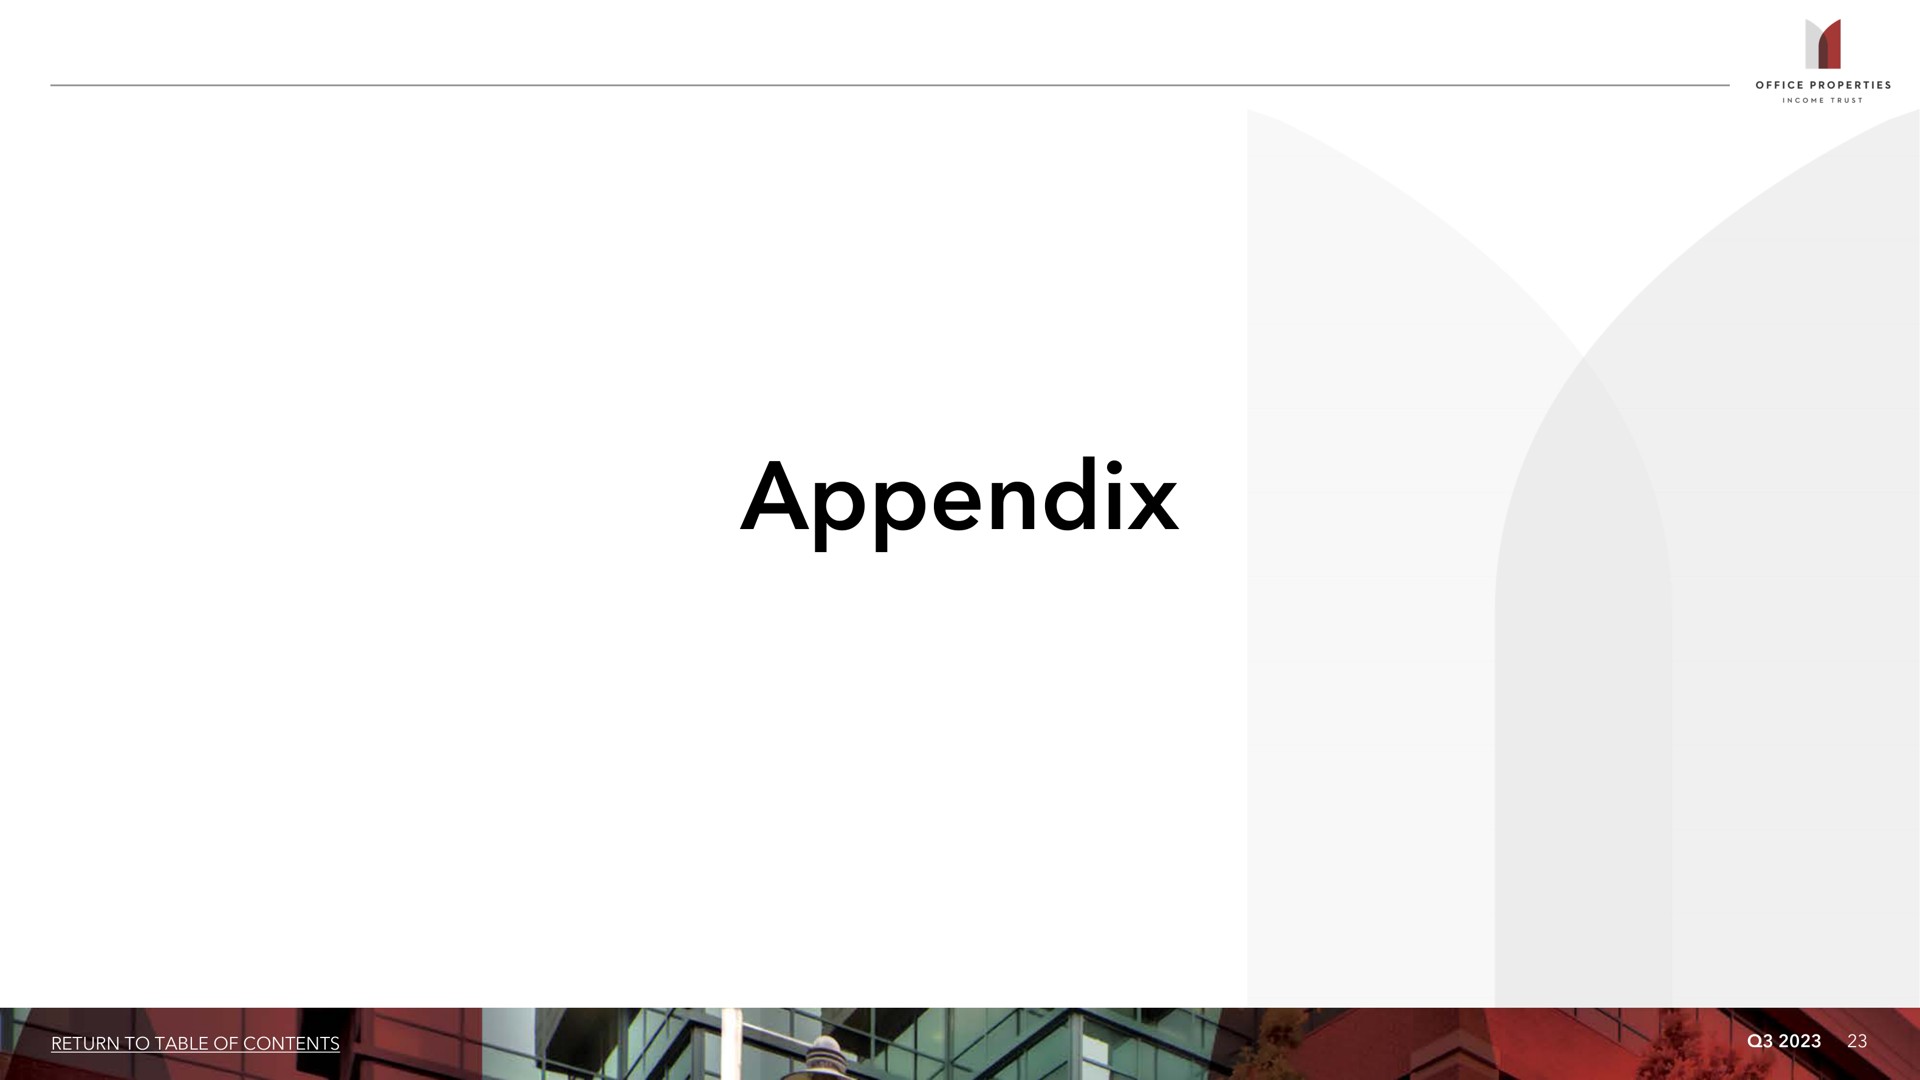 appendix | Office Properties Income Trust